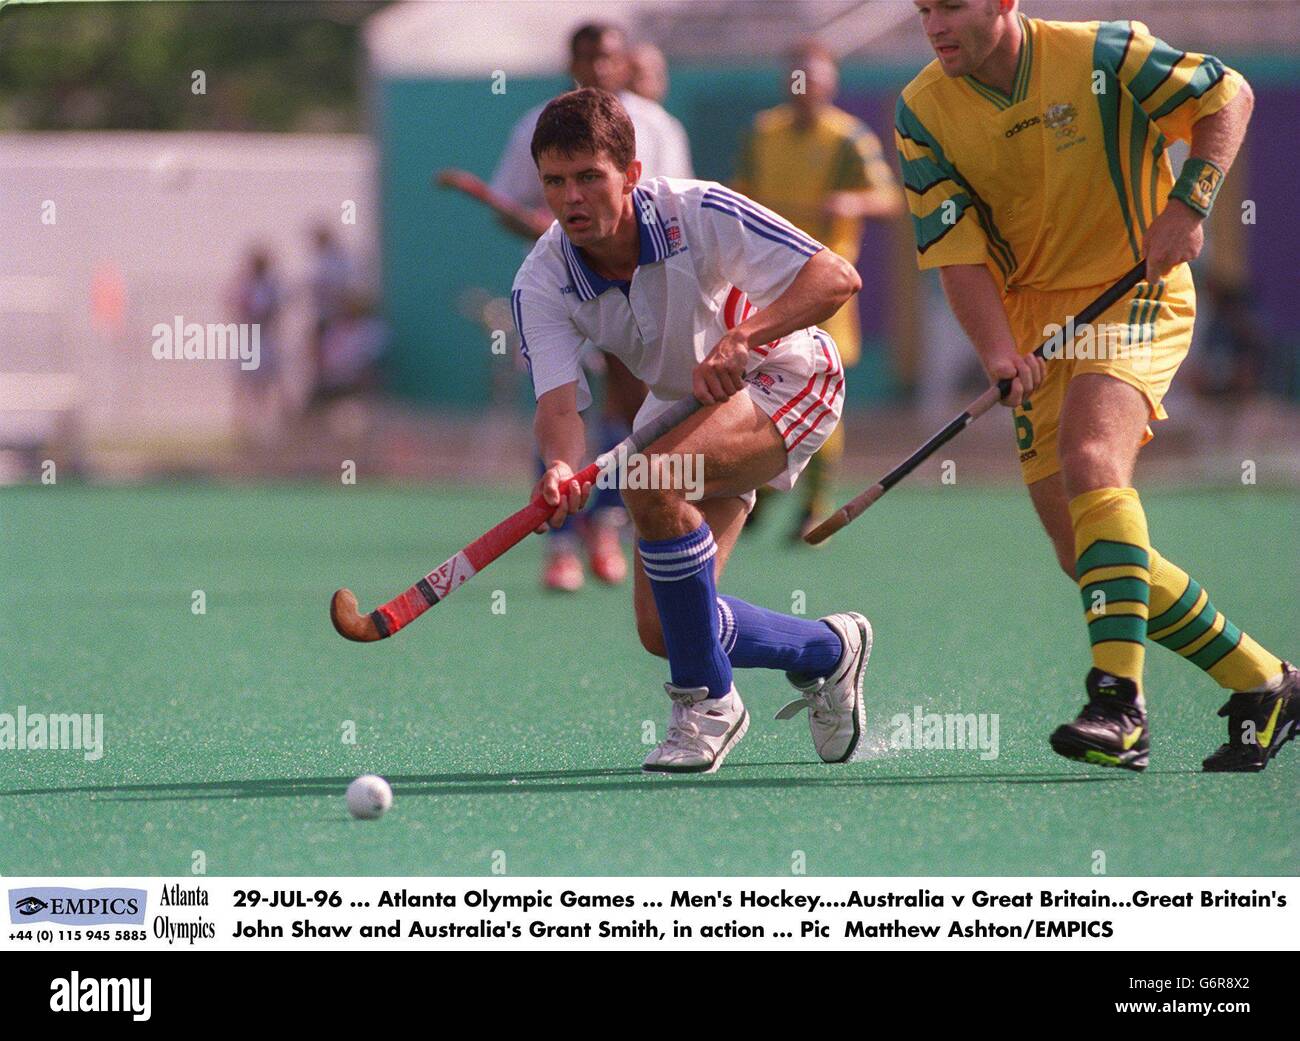 29-JUL-96 ... Atlanta Olympic Games ... Men's Hockey. Australia v Great  Britain. Great Britain's John Shaw and Australia's Grant Smith, in action  Stock Photo - Alamy